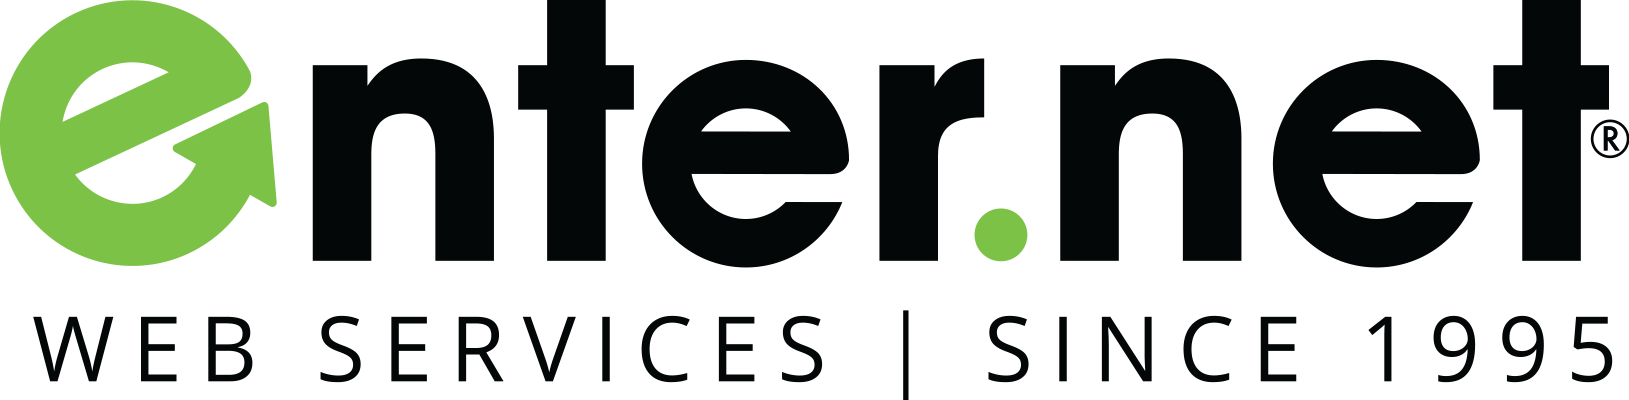 Enter.net Logo